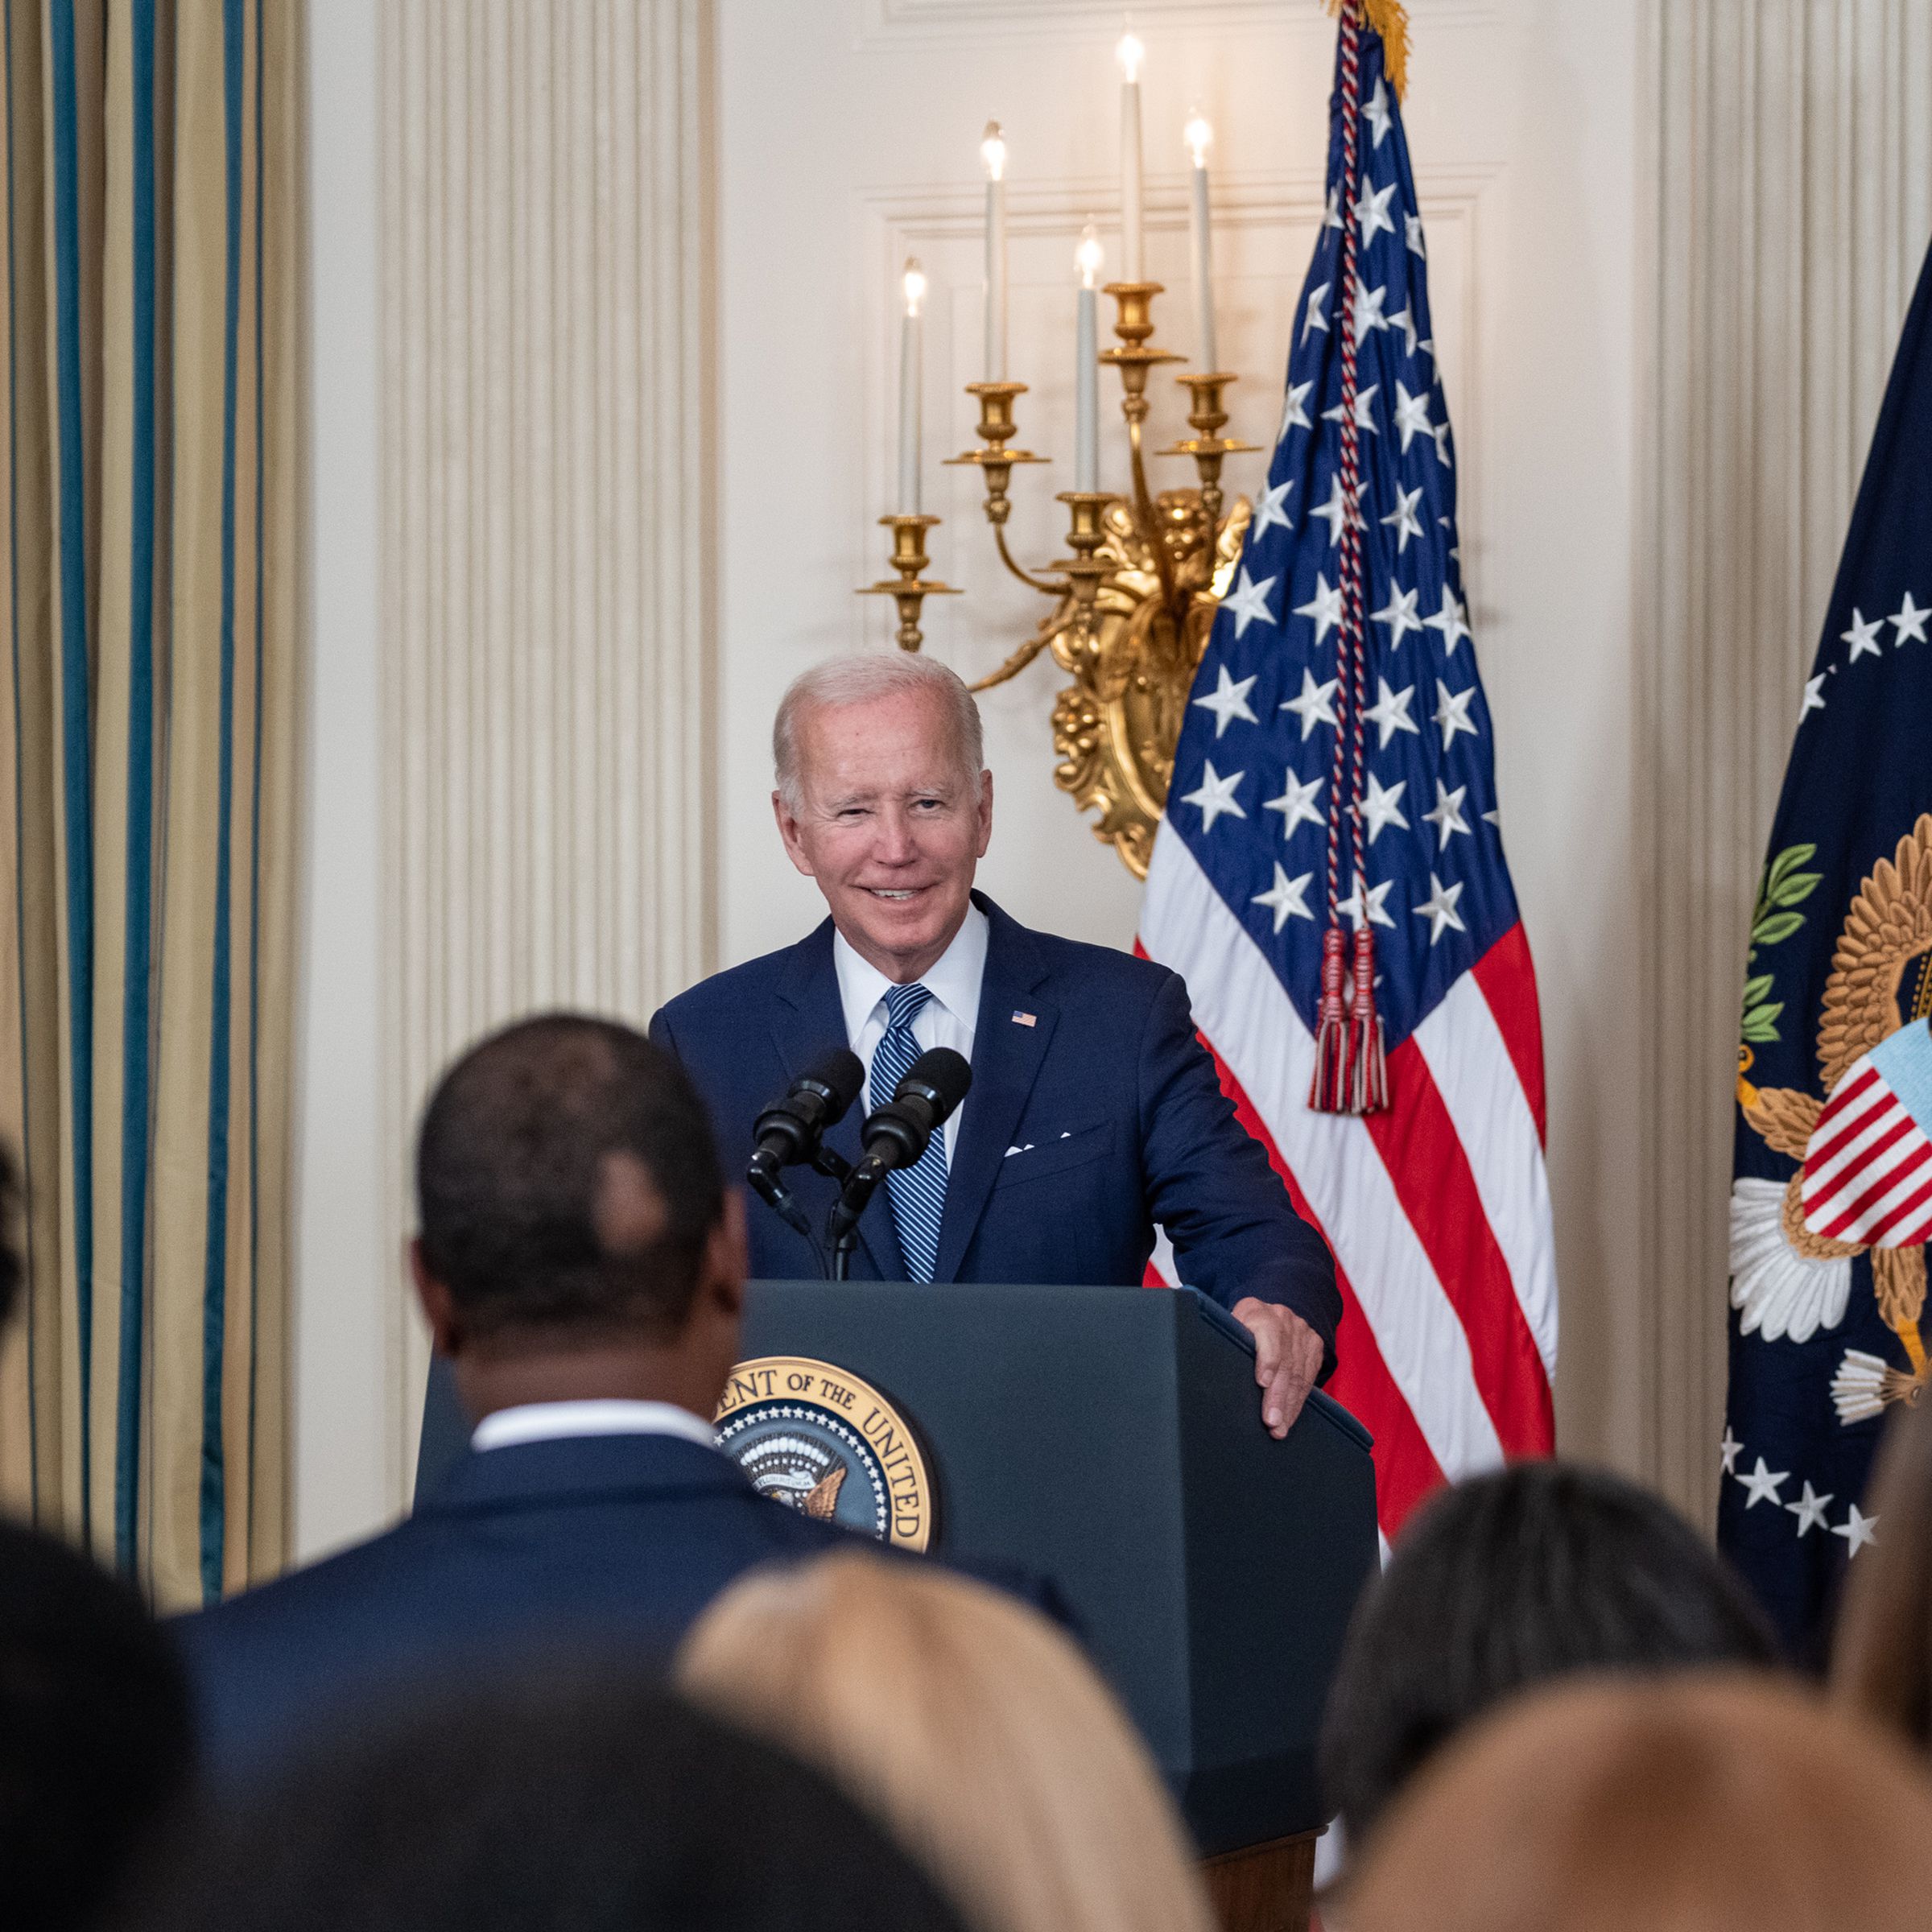 Joe Biden speaks at a podium in front of a crowd.